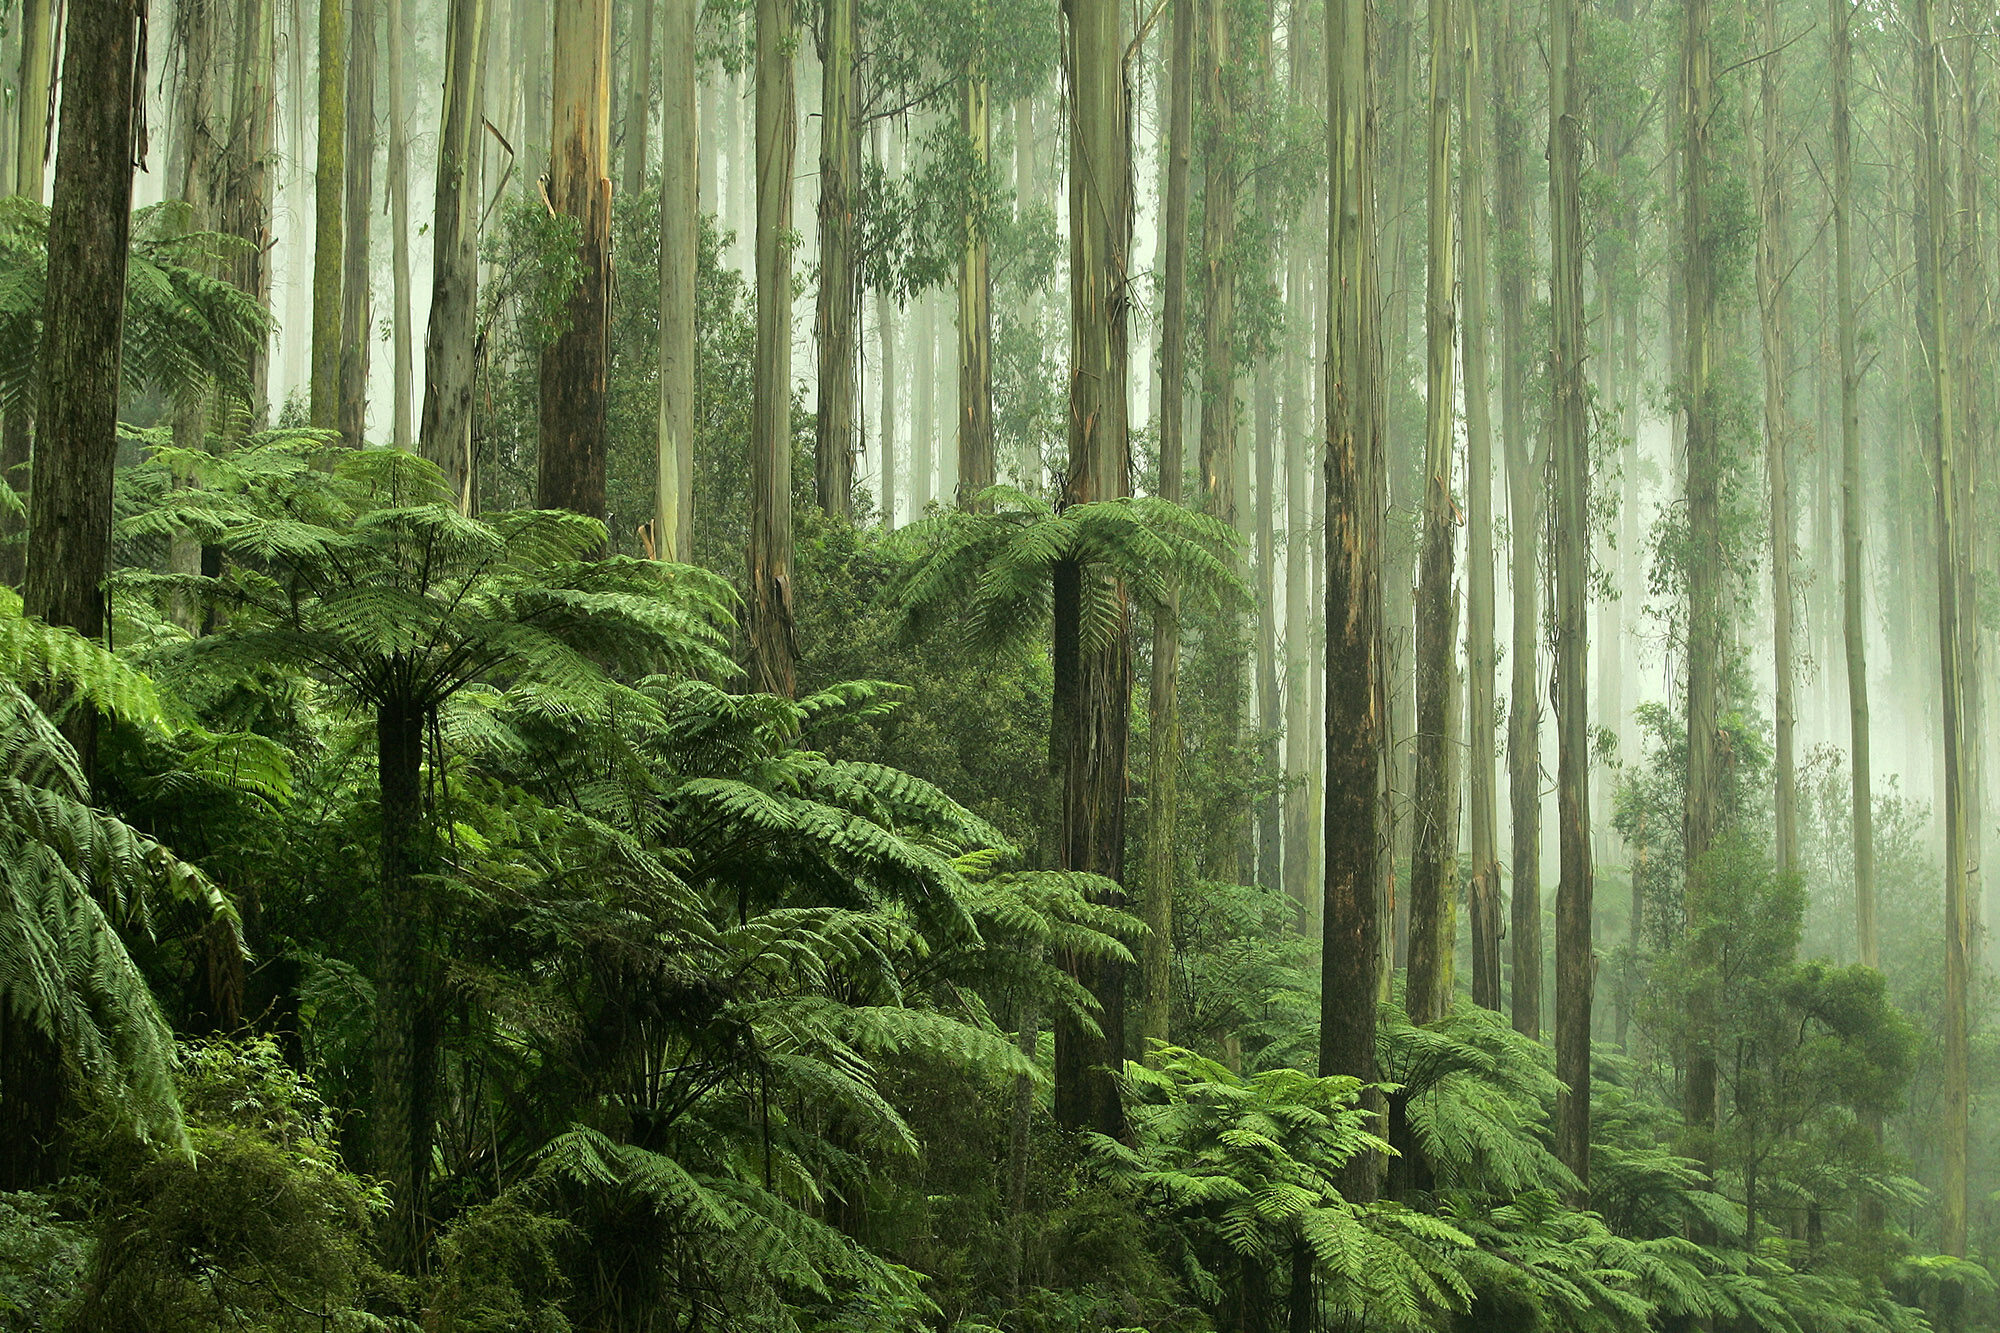 Photo: Pangolin Associates: Climate Change Services Consultancy - VIC Australia, trees